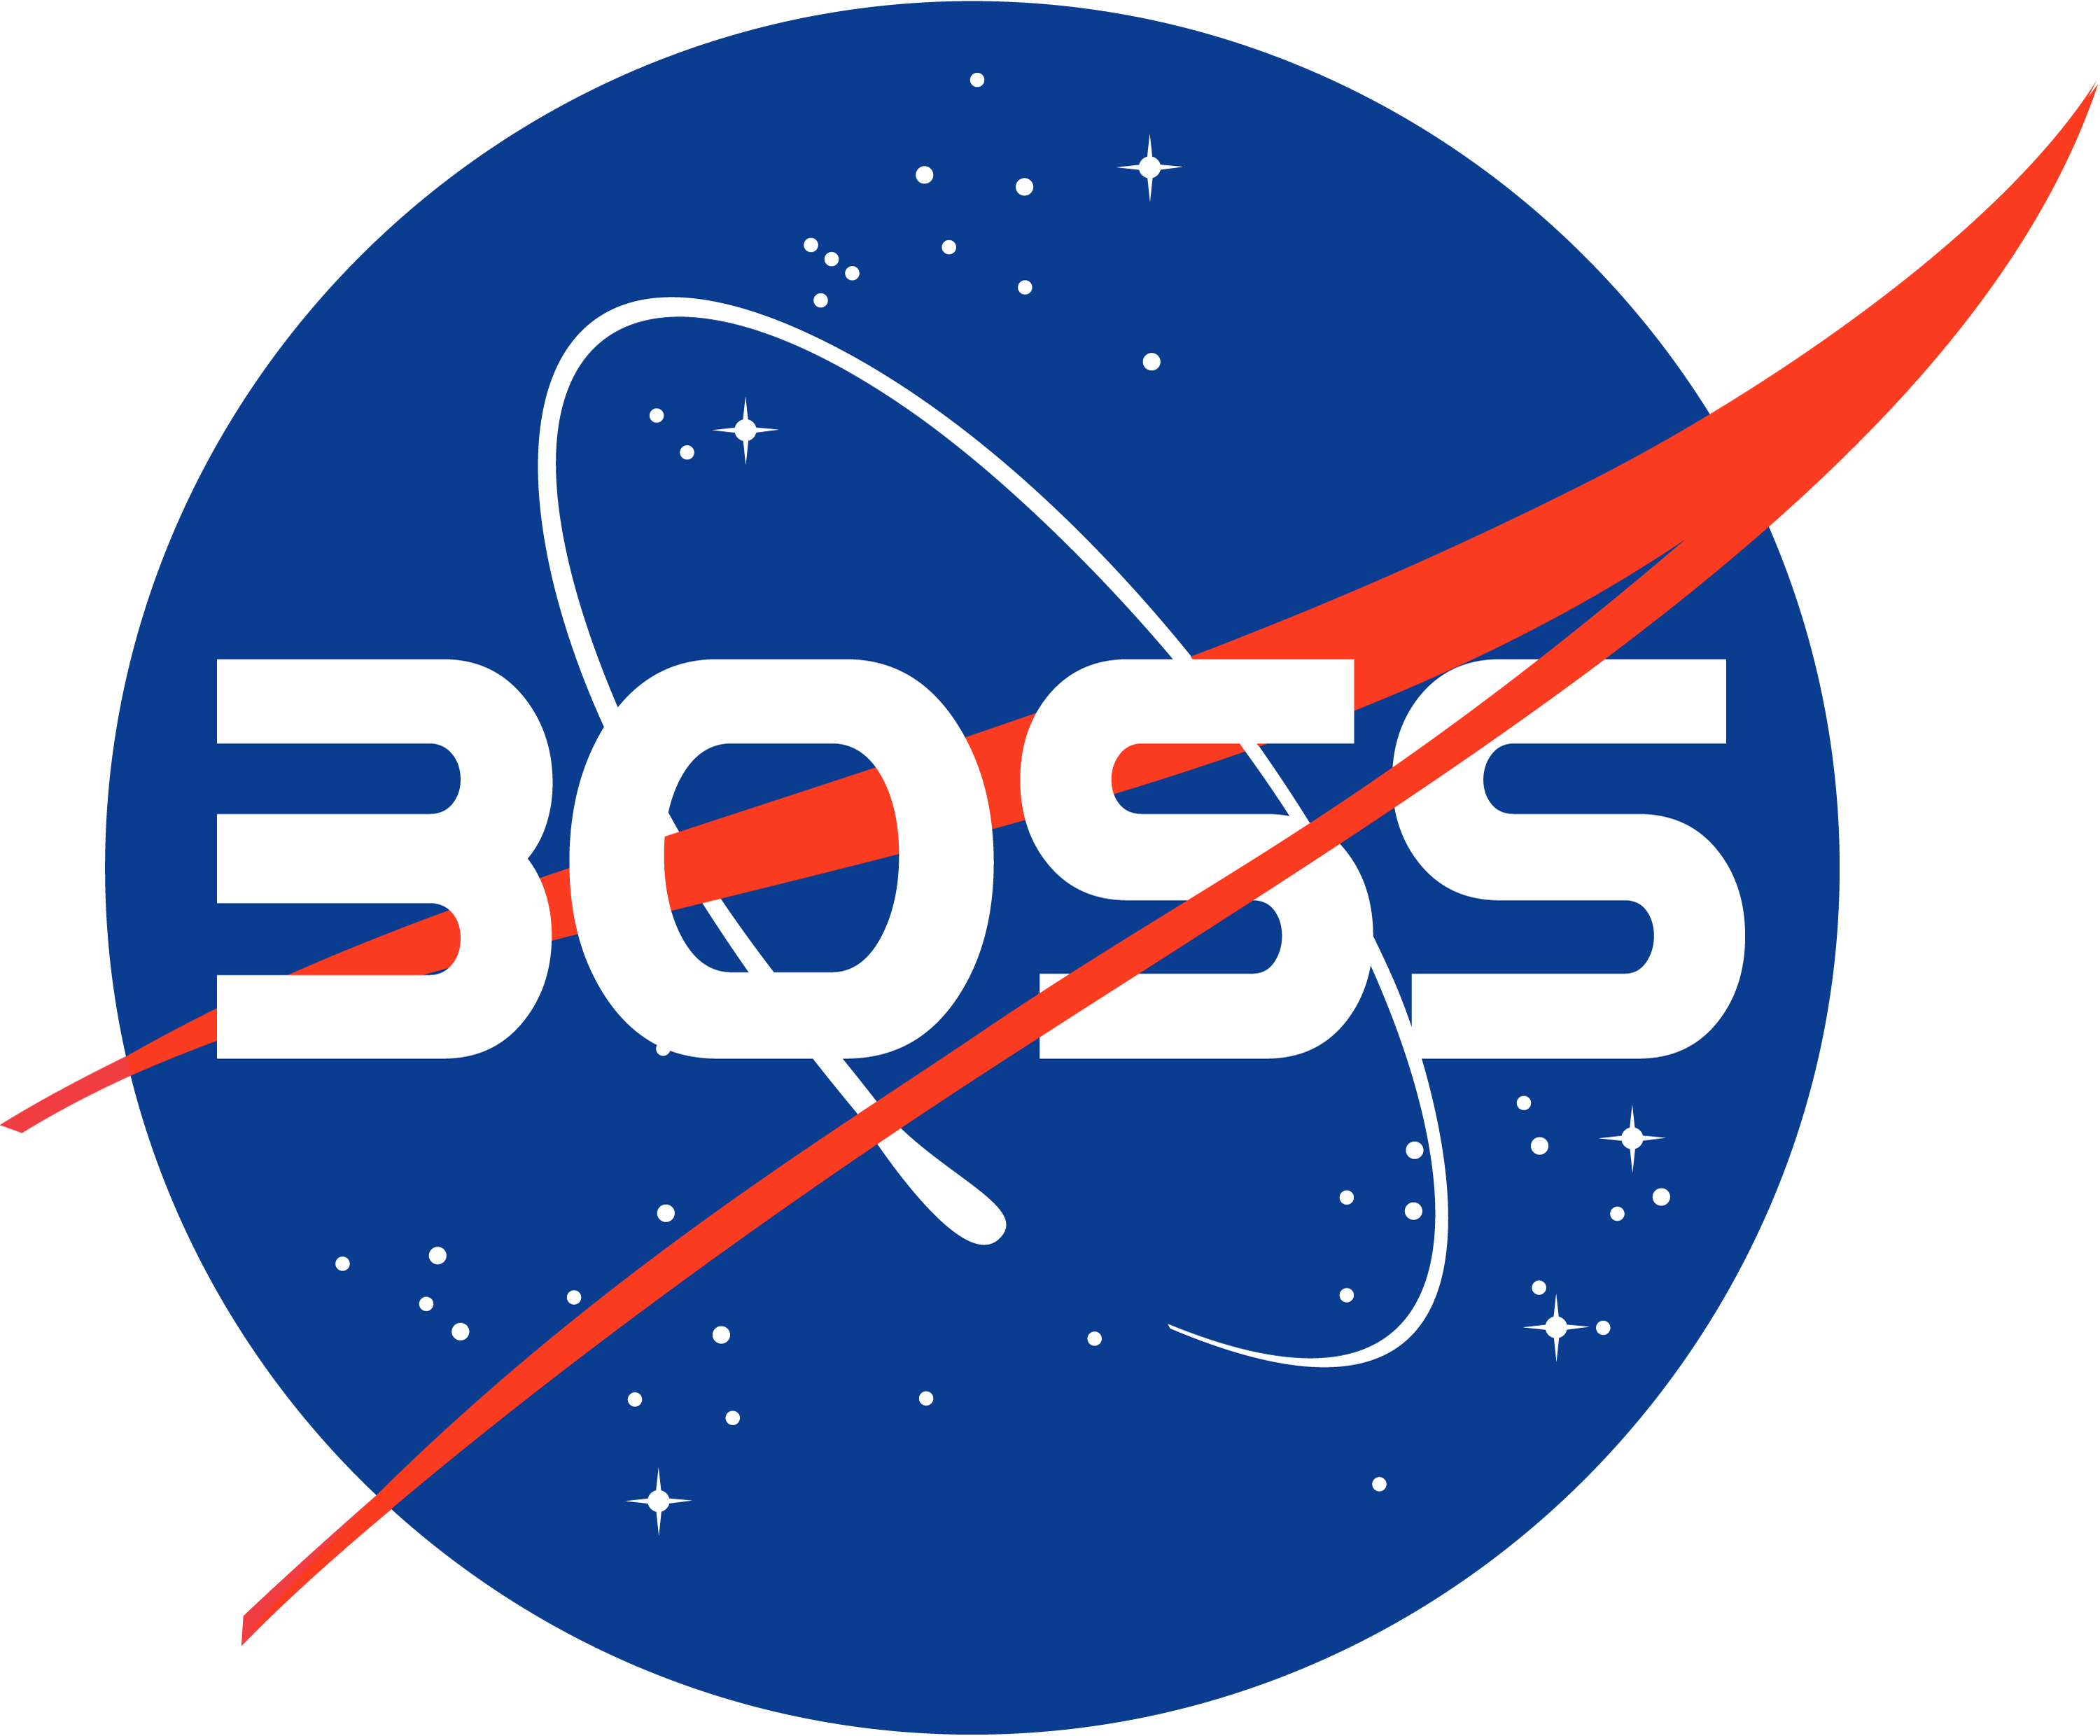 Boss Logo - I made a higher quality BOSS logo